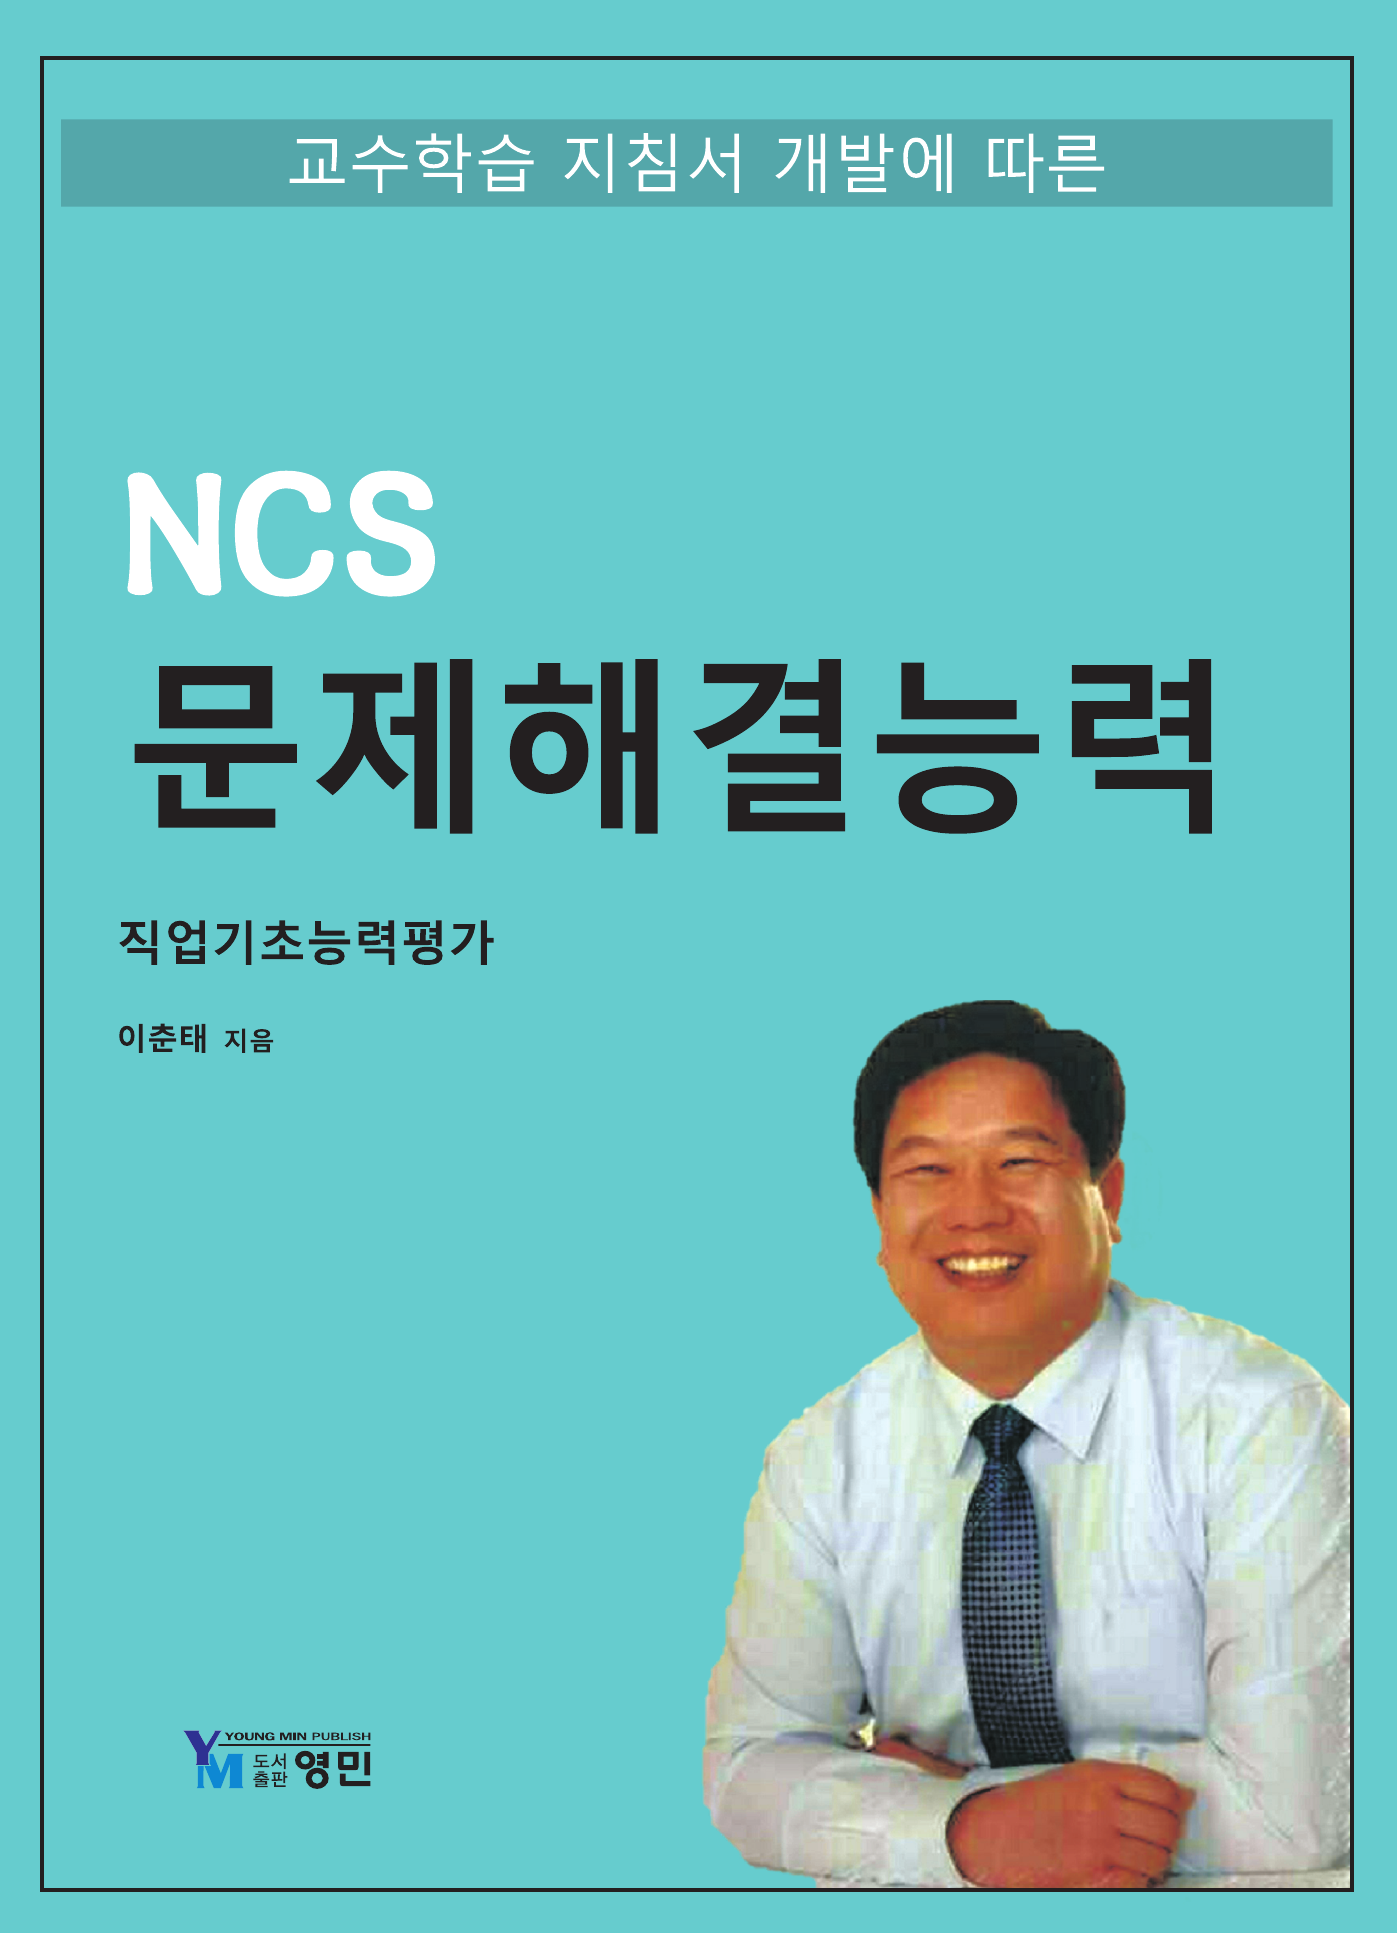 NCS기준 문제해결능력